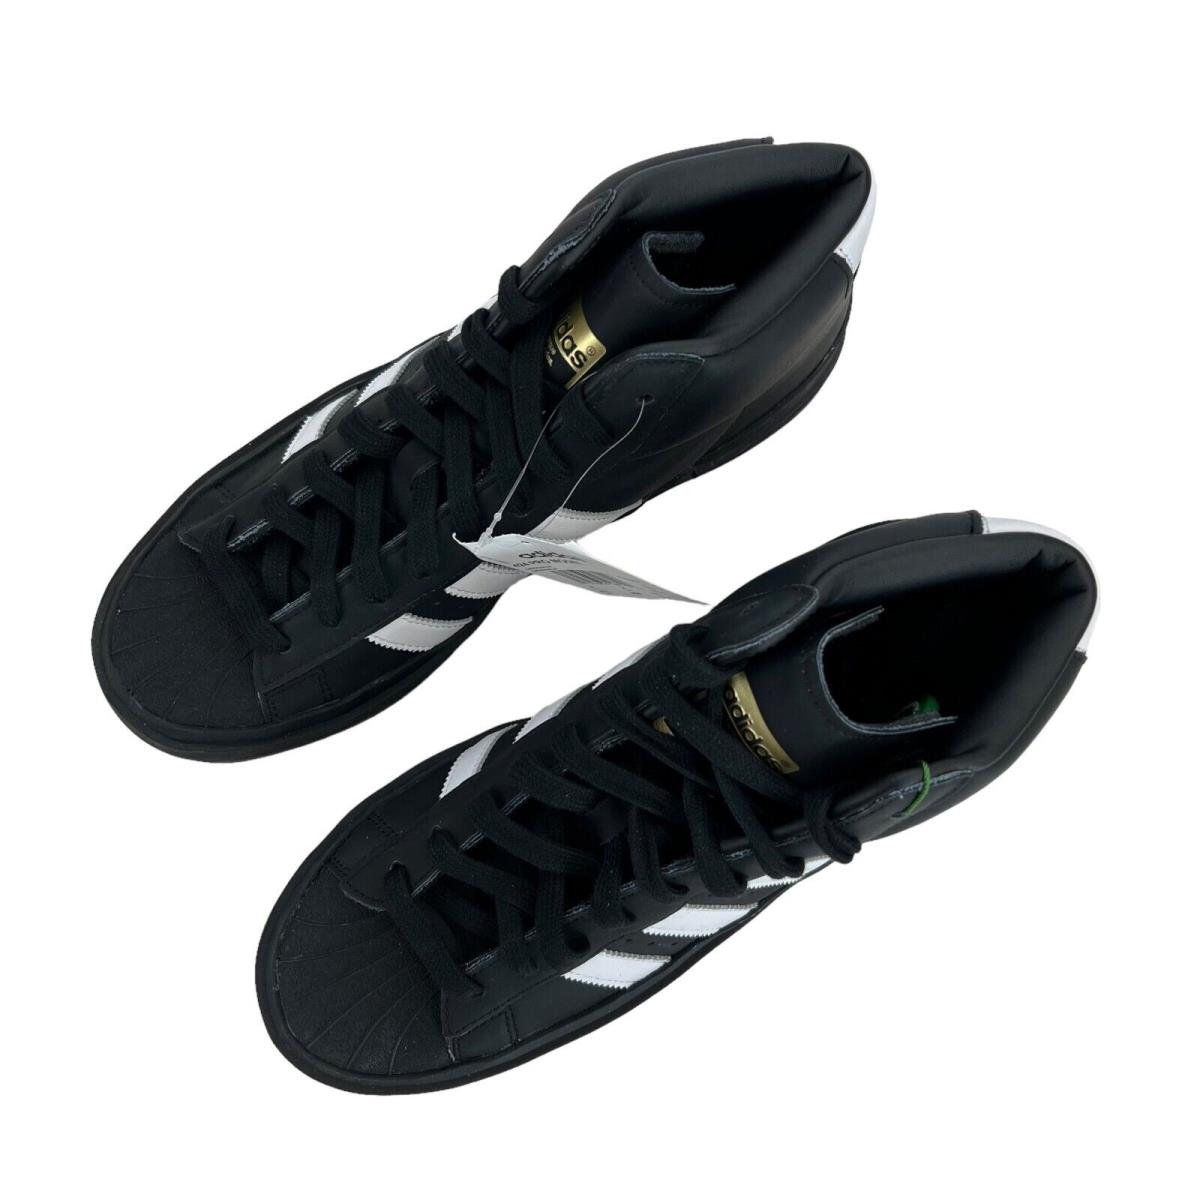 Mens Size 8.5 - Adidas Pro Model x 424 FX6849 - Black